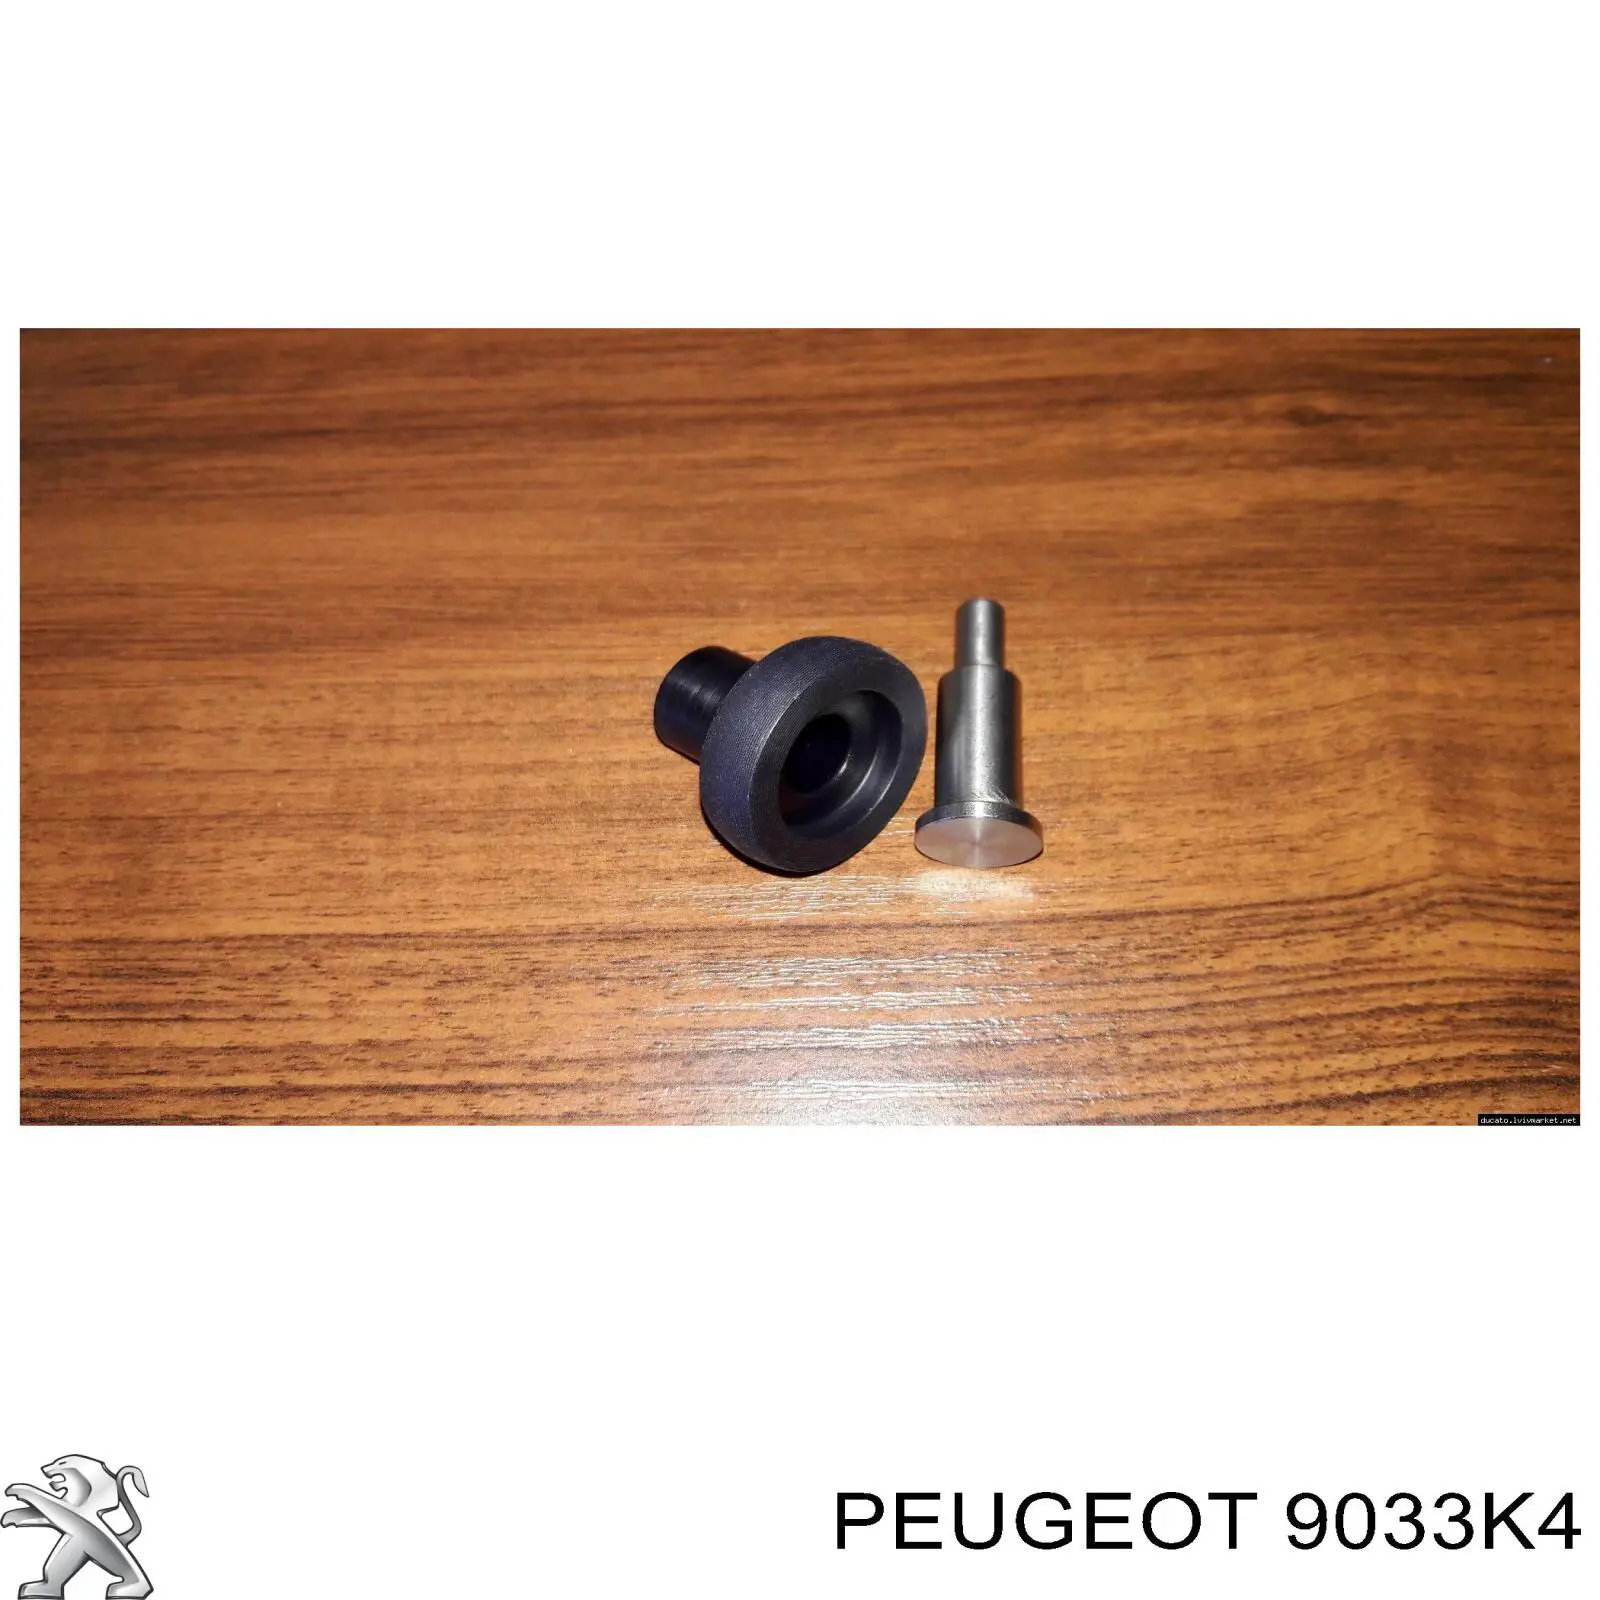 9033K4 Peugeot/Citroen guía rodillo, puerta corrediza, derecho superior